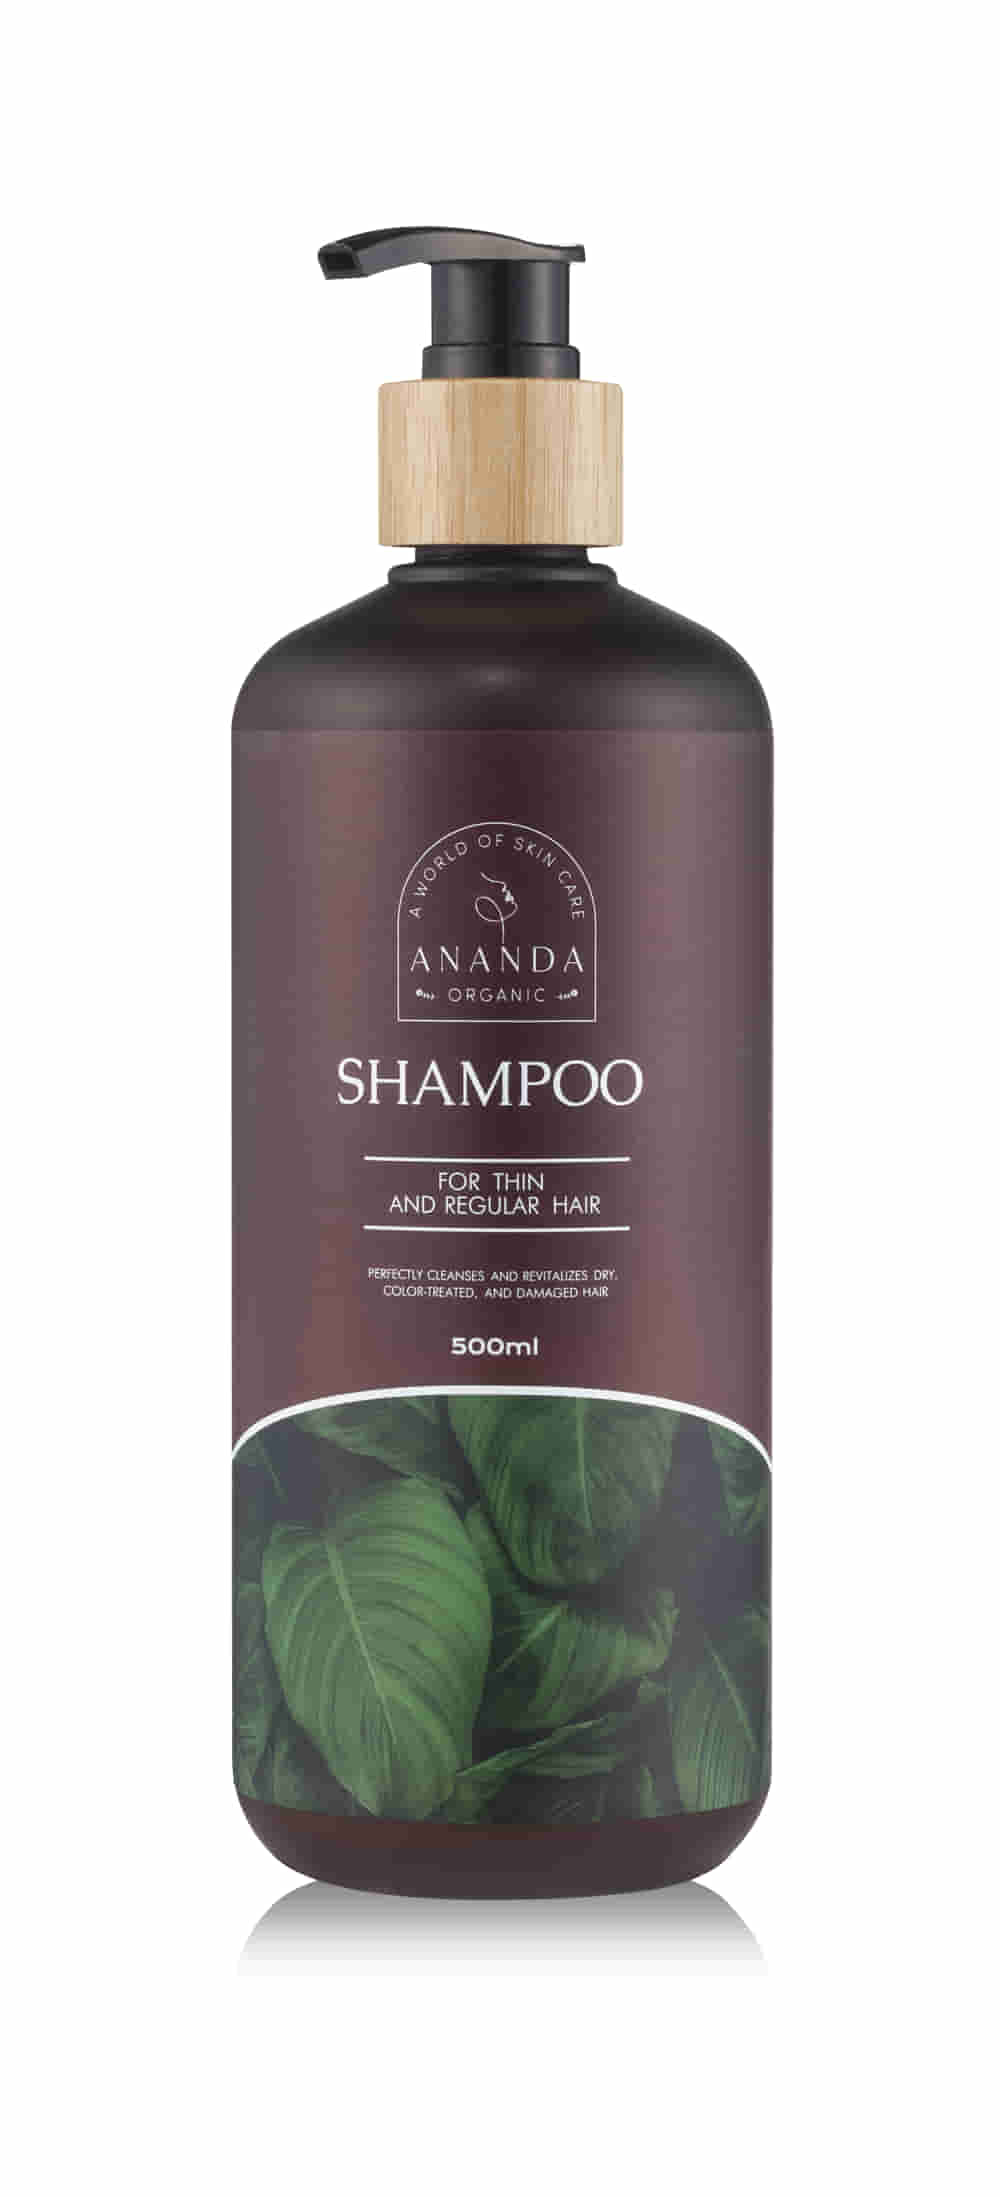 Organic Shampoo for thin and regular hair - Ananda Bio Cosmetic